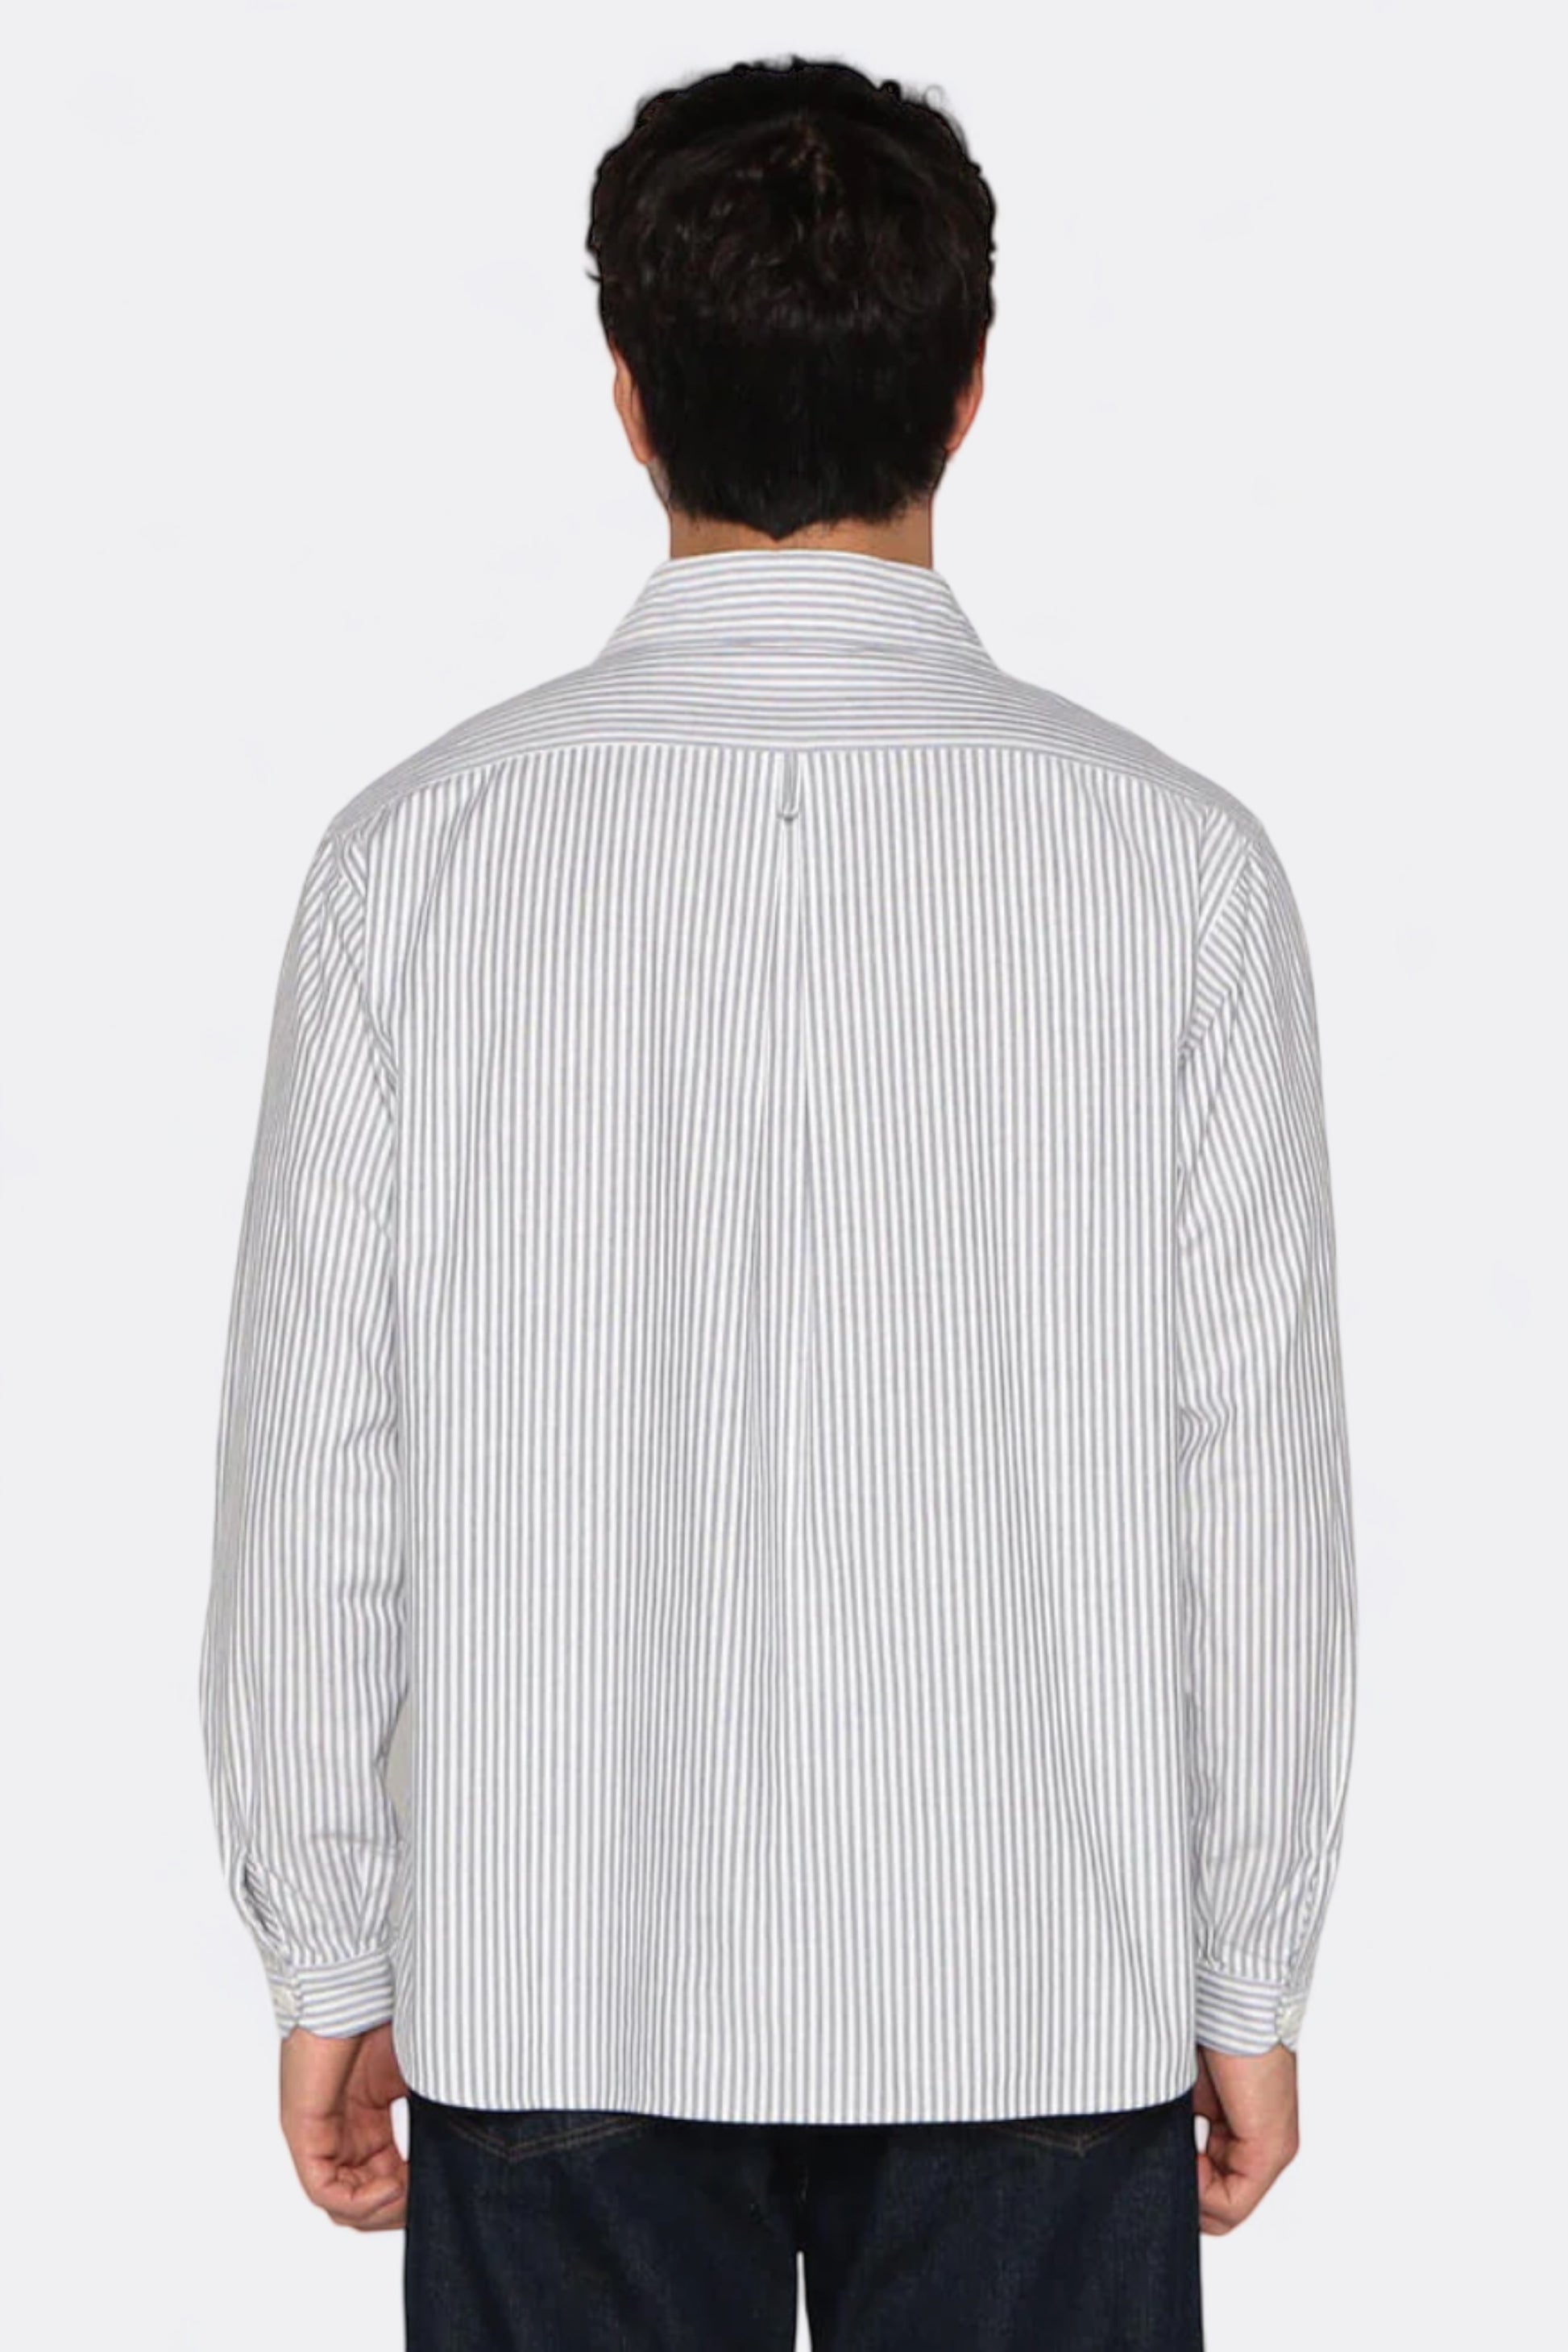 Danton - Oxford Round Collar Pullover Shirt L/S (Navy / White Stripe)